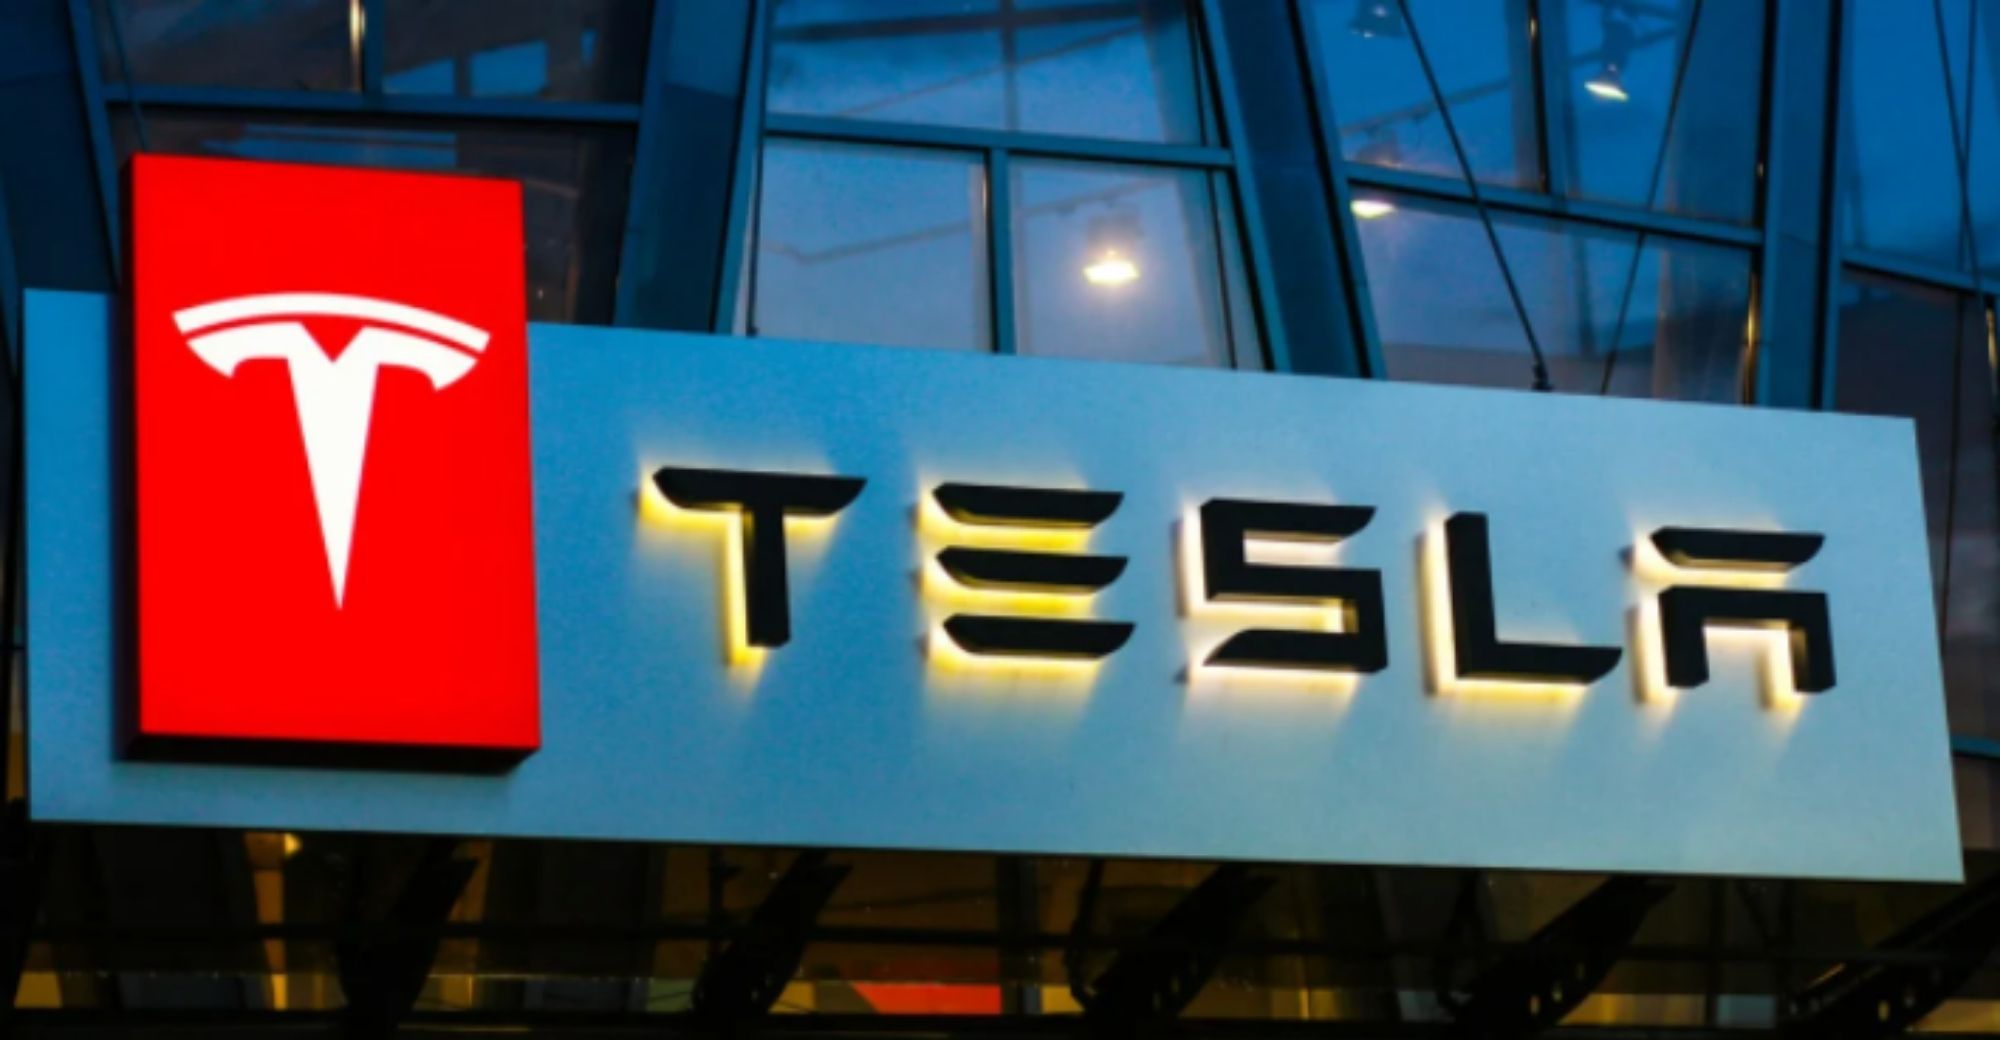 Tesla Wins Lawsuit Against “Tesla Beer” Trademark Infringement Case